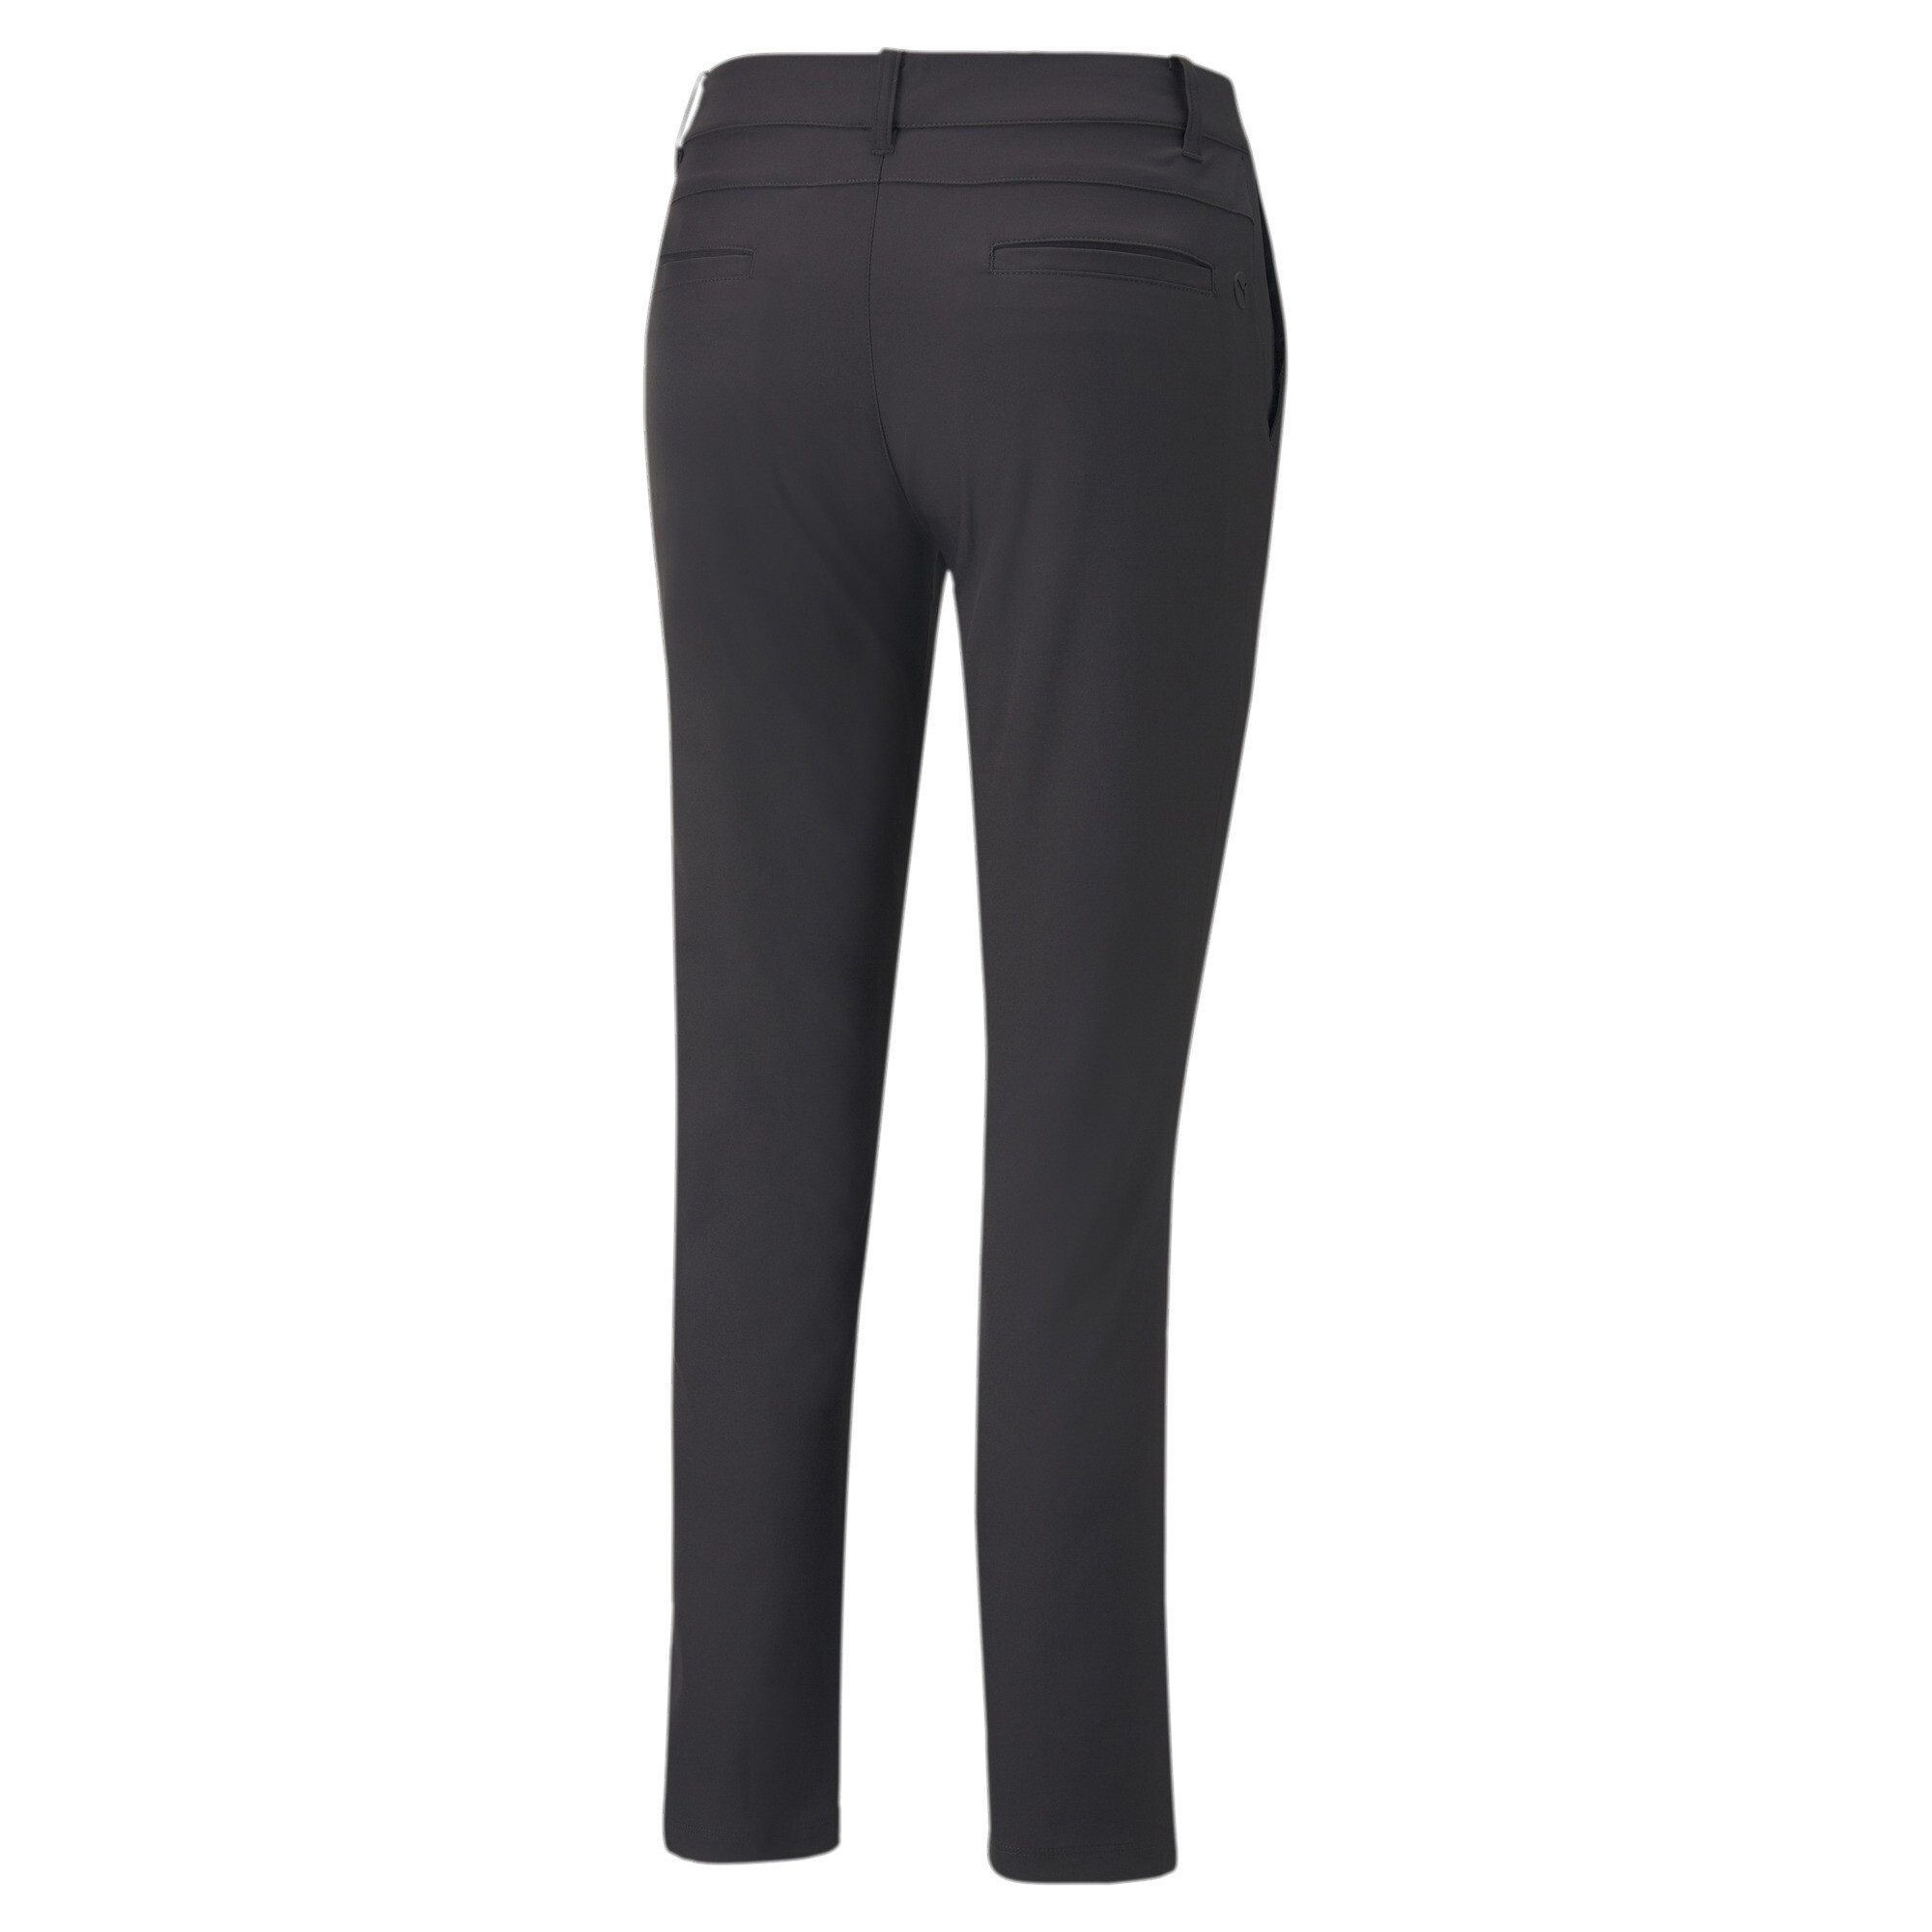 Women's Puma W Boardwalk Golf Pants, Black, Size L, Clothing